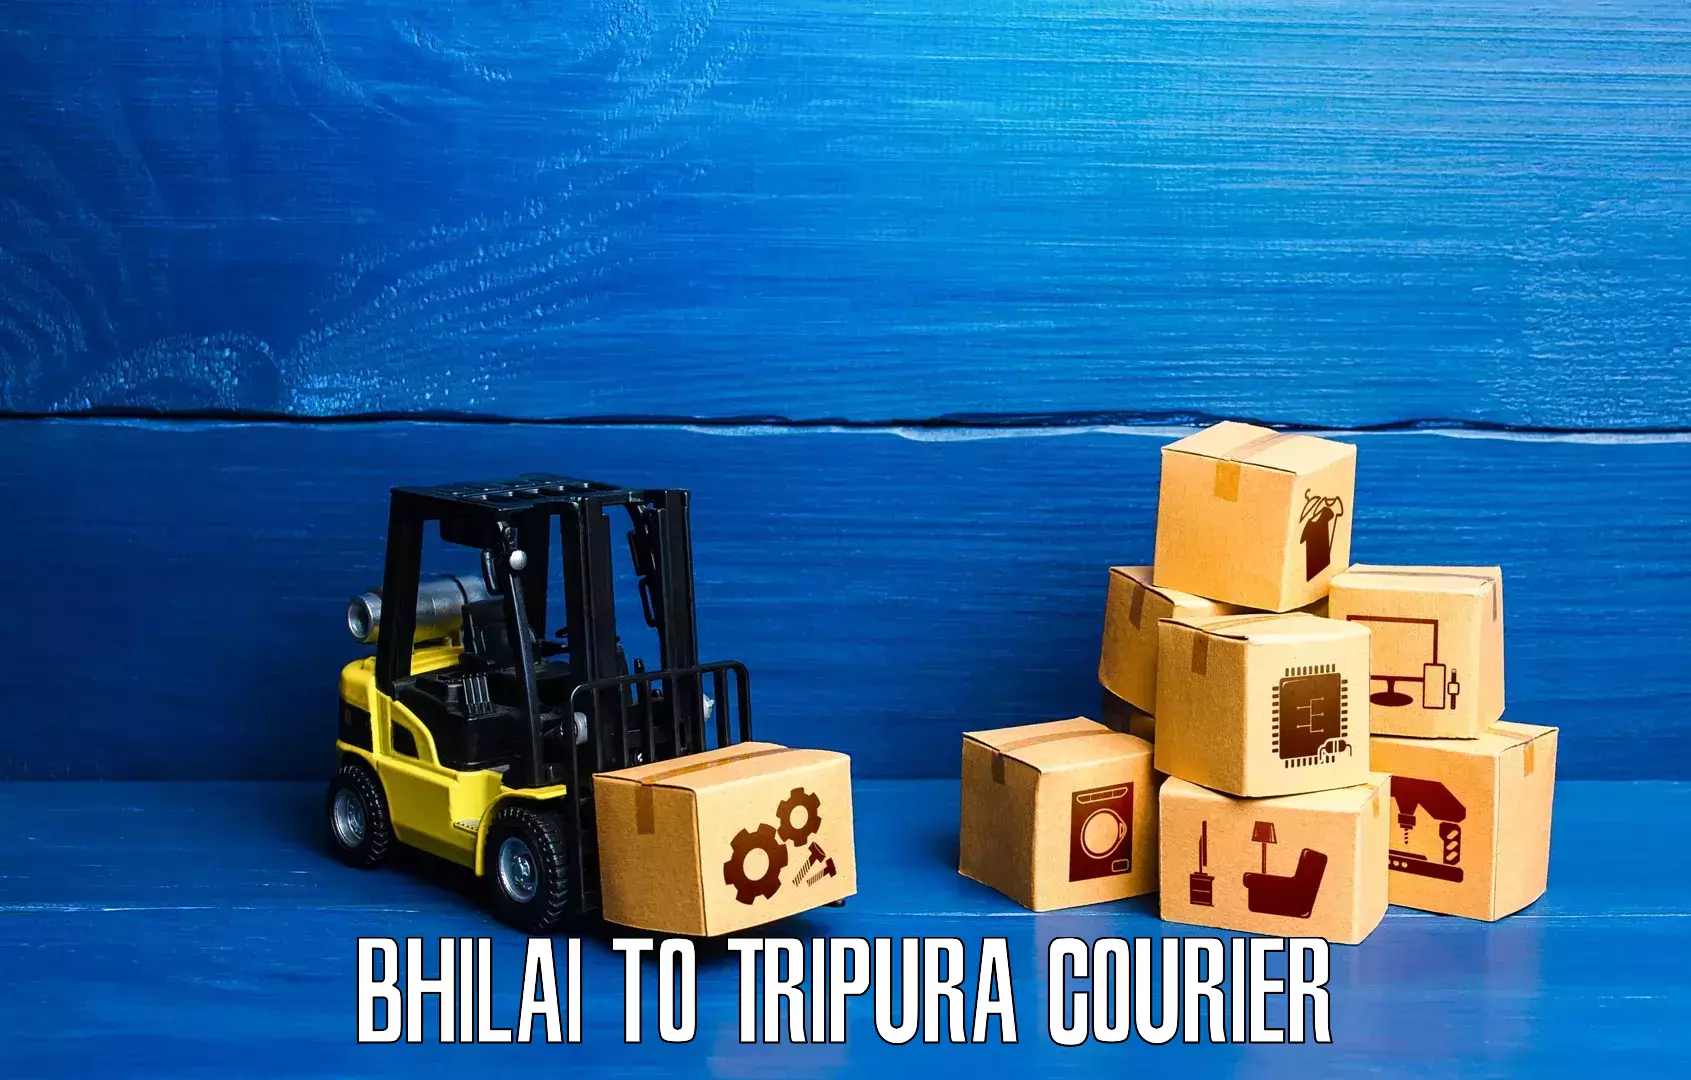 Global logistics network Bhilai to Aambasa